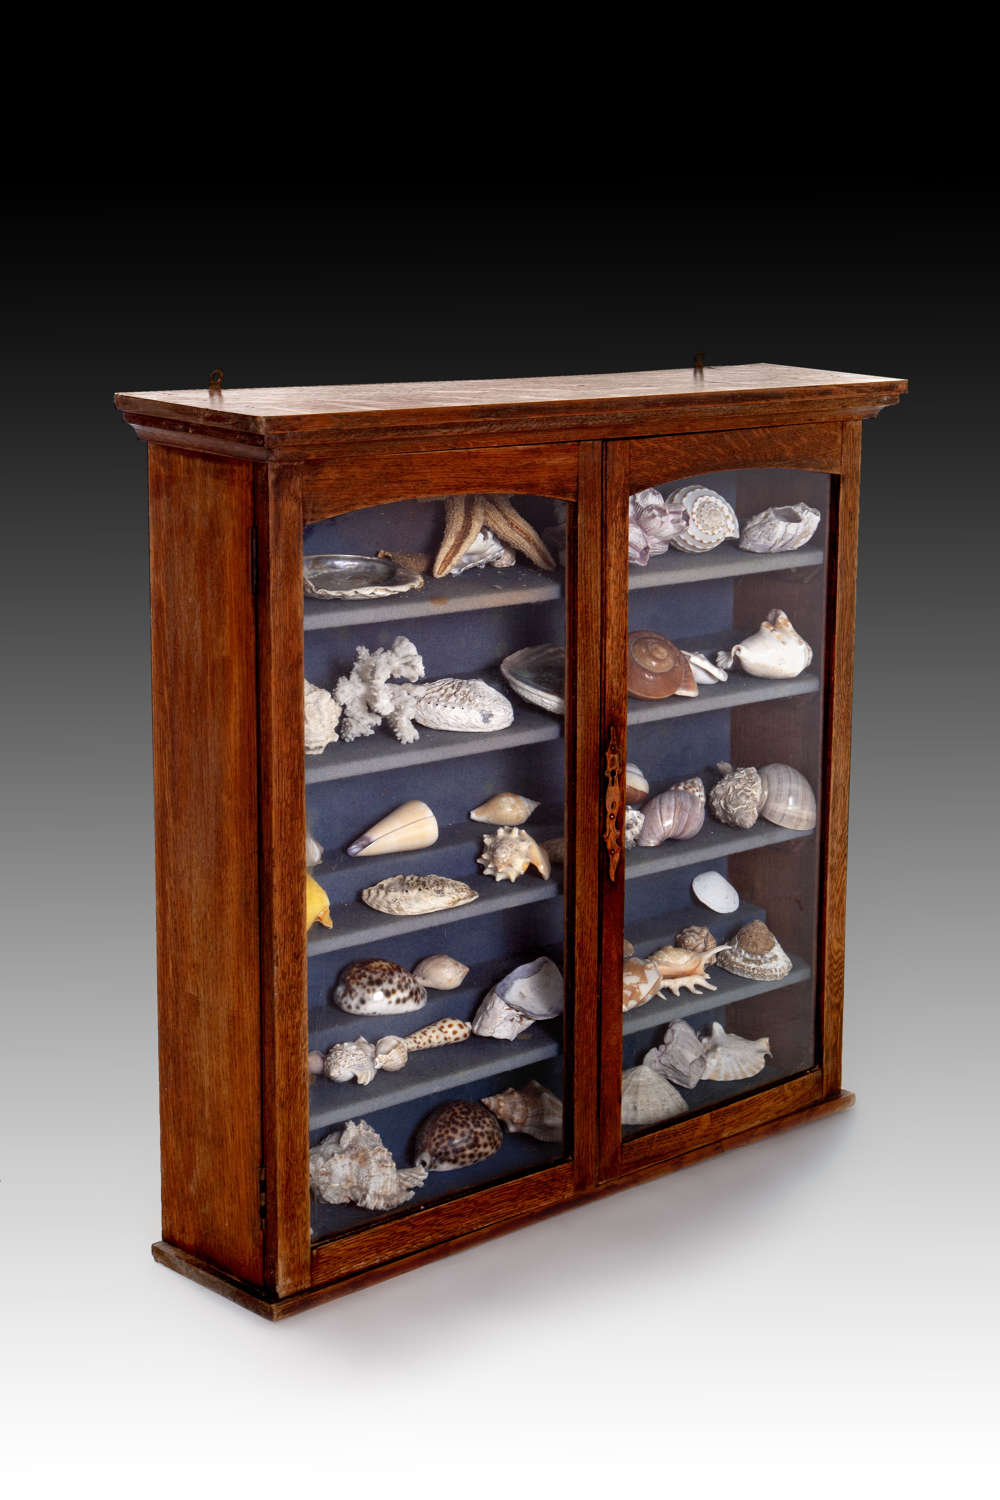 A 19th century oak collectors cabinet with sea shells